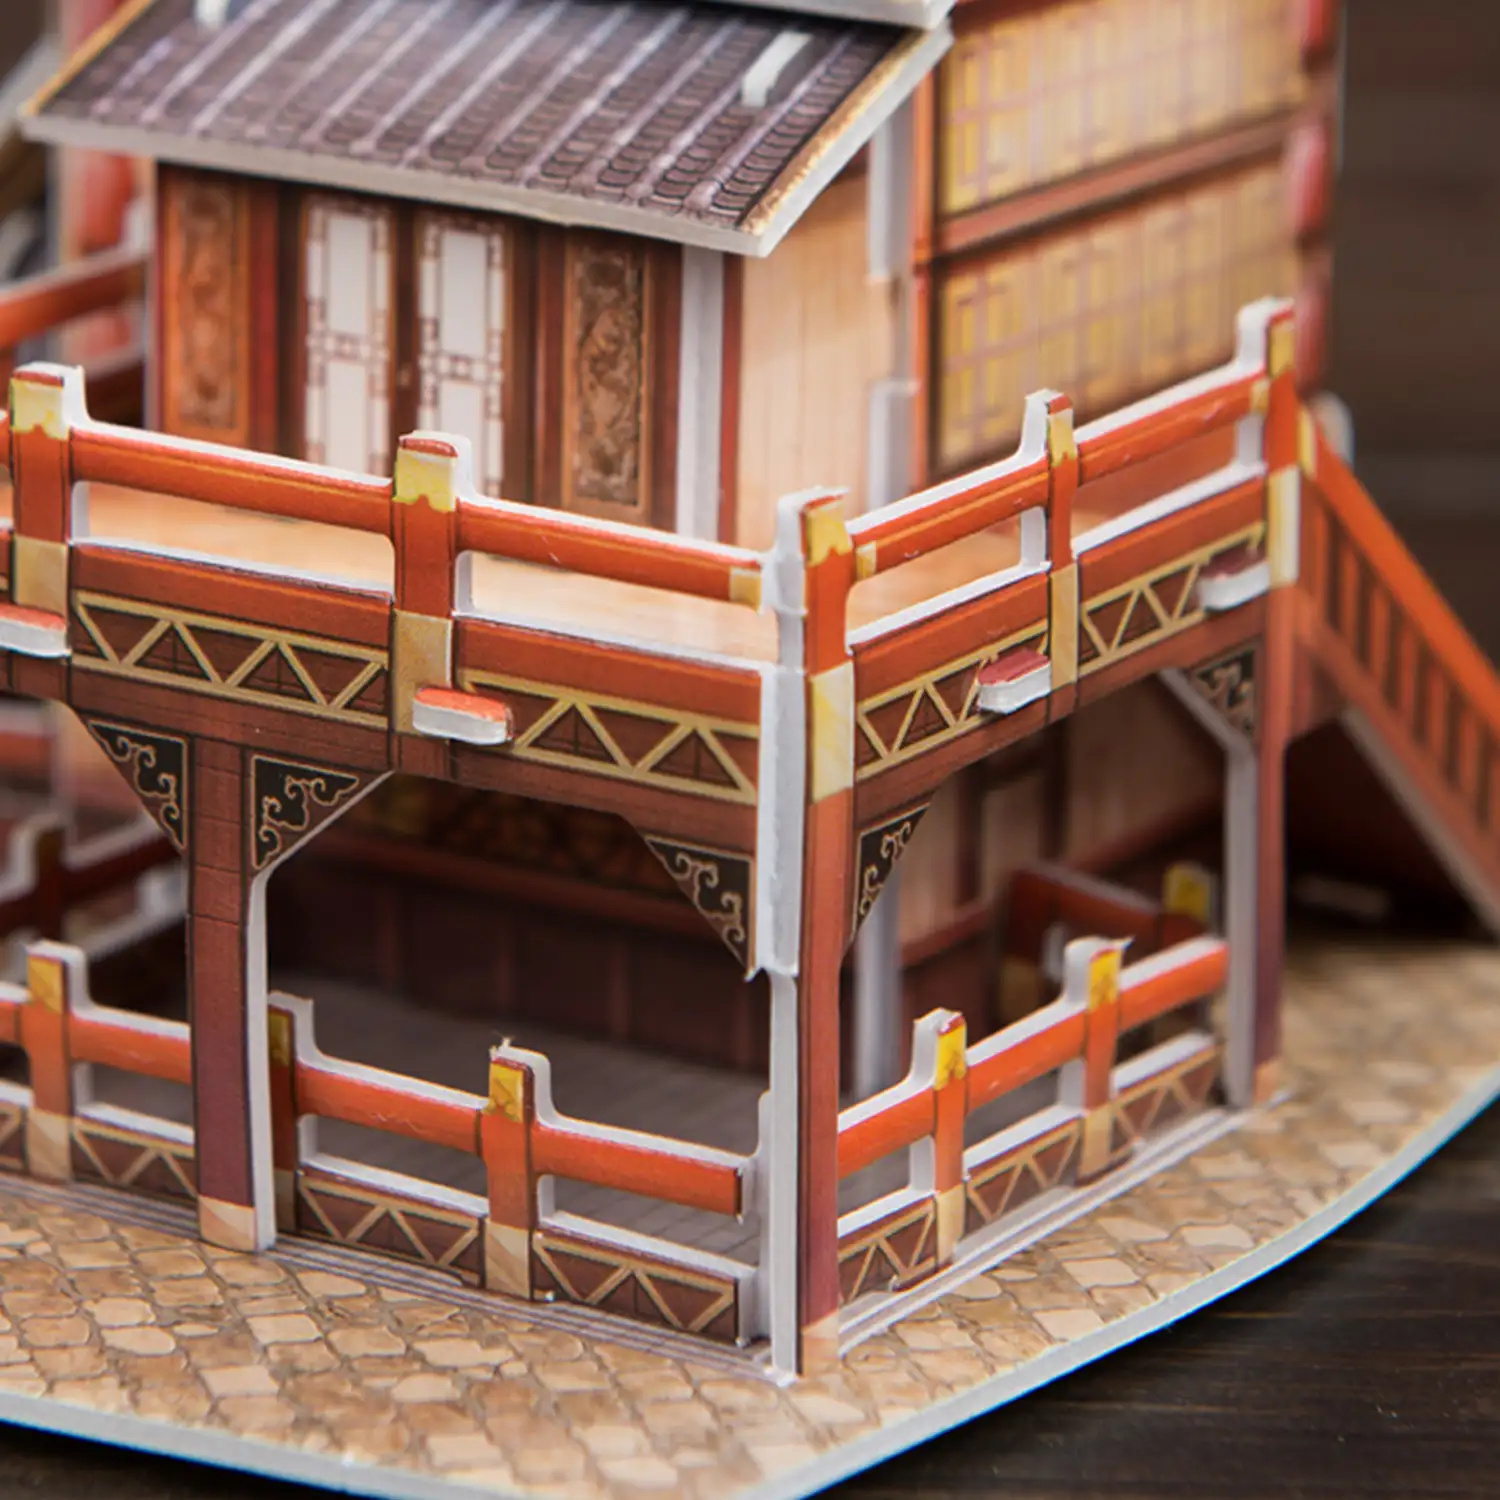 Puzzle 3D WORLD STYLE CHINA ORIENTAL TABERNA DEL DRAGÓN tradicional